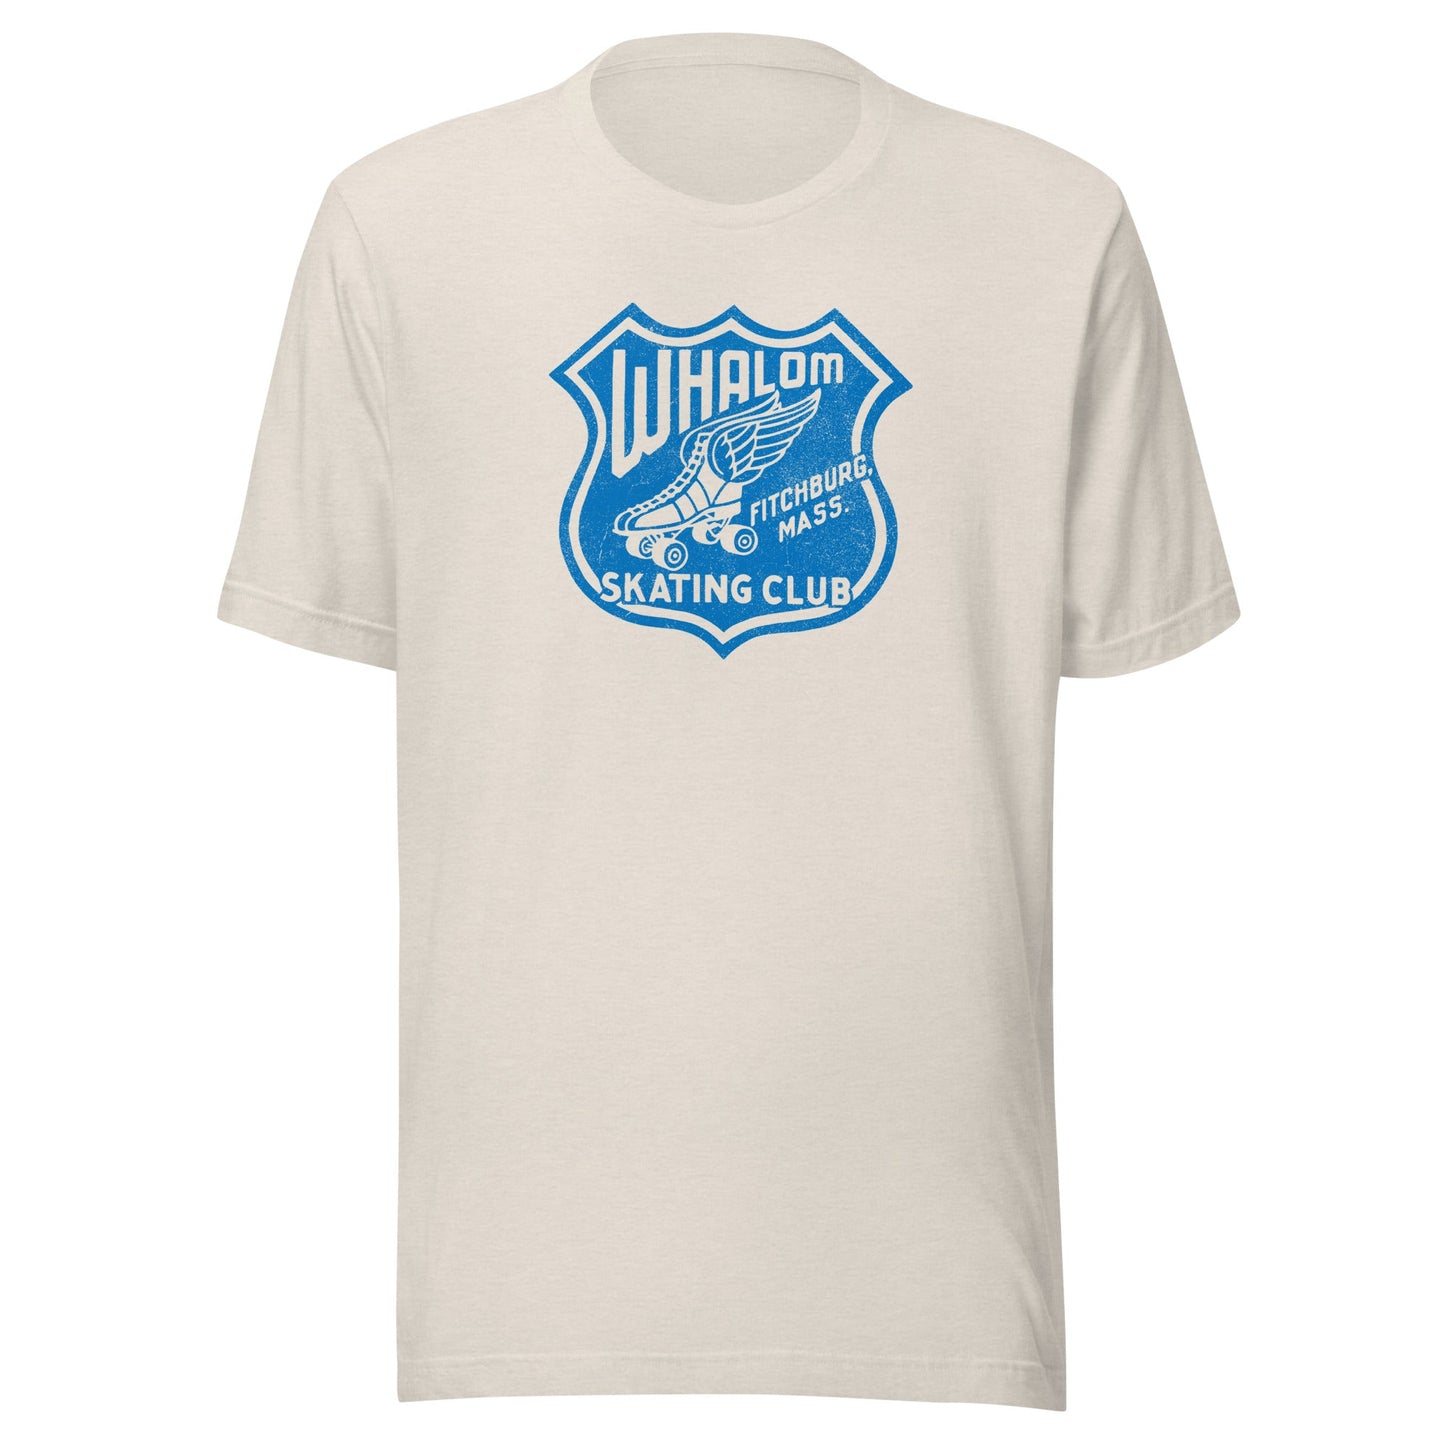 Whalom Skating Club T-Shirt - Fitchburg, MA | Vintage Roller Skating Graphic Tee